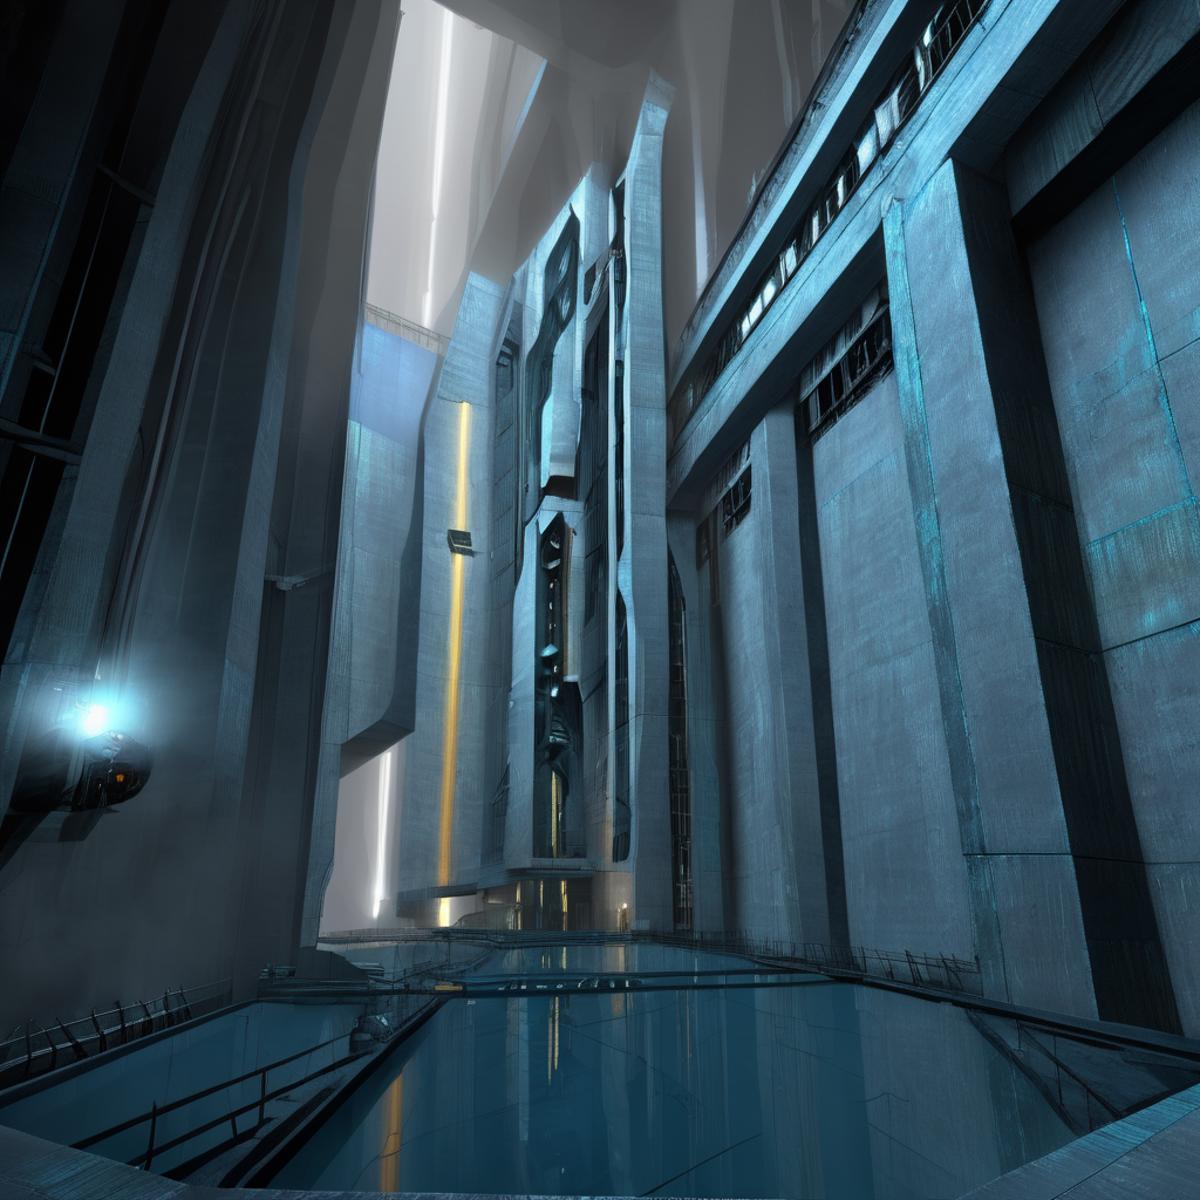 The Citadel | Half-Life 2 image by justTNP